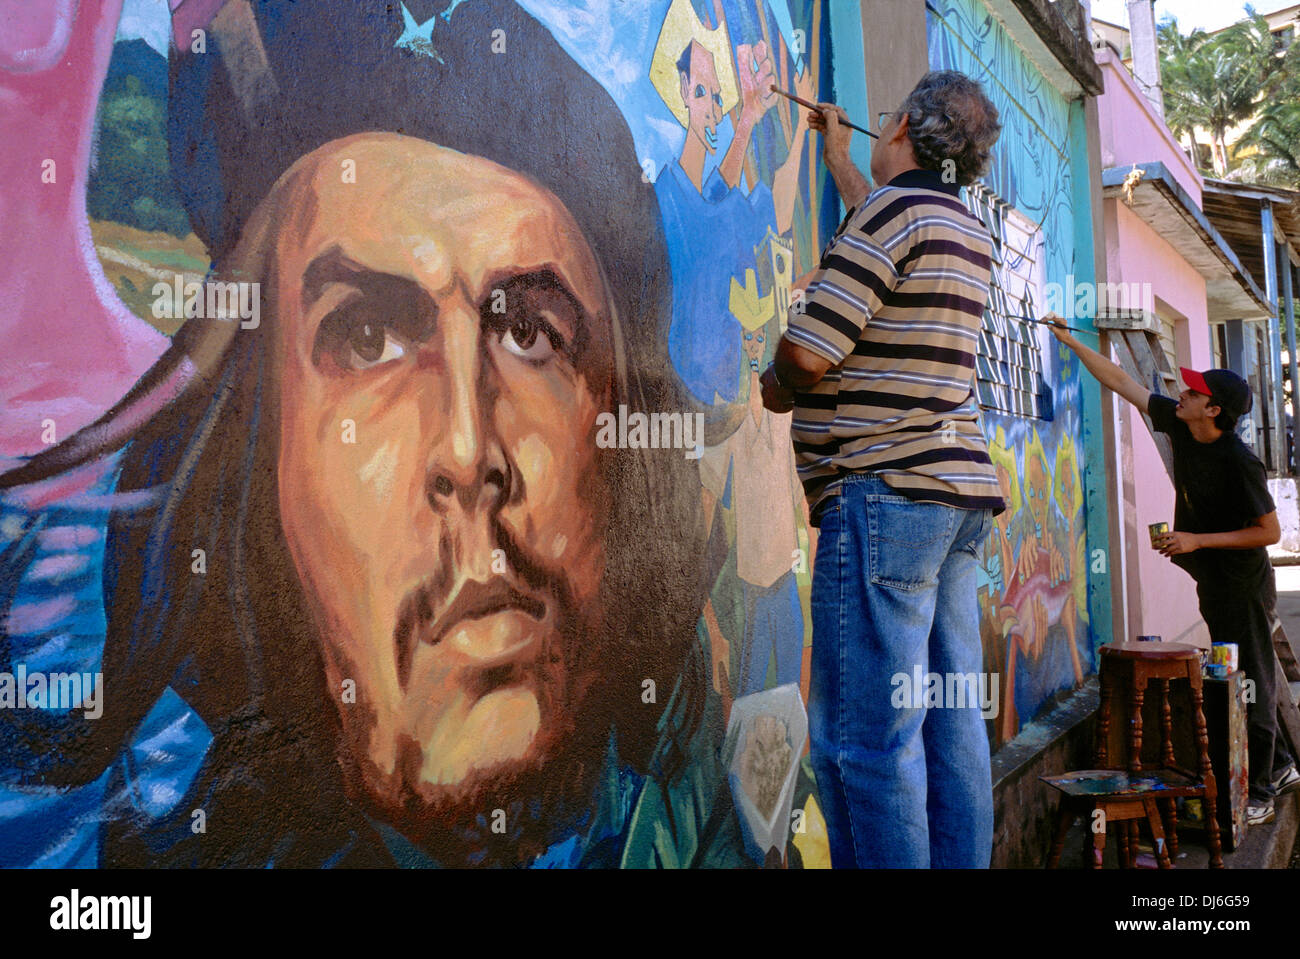 Artista cubano e hijo de pintura mural del Che Guevara Foto de stock